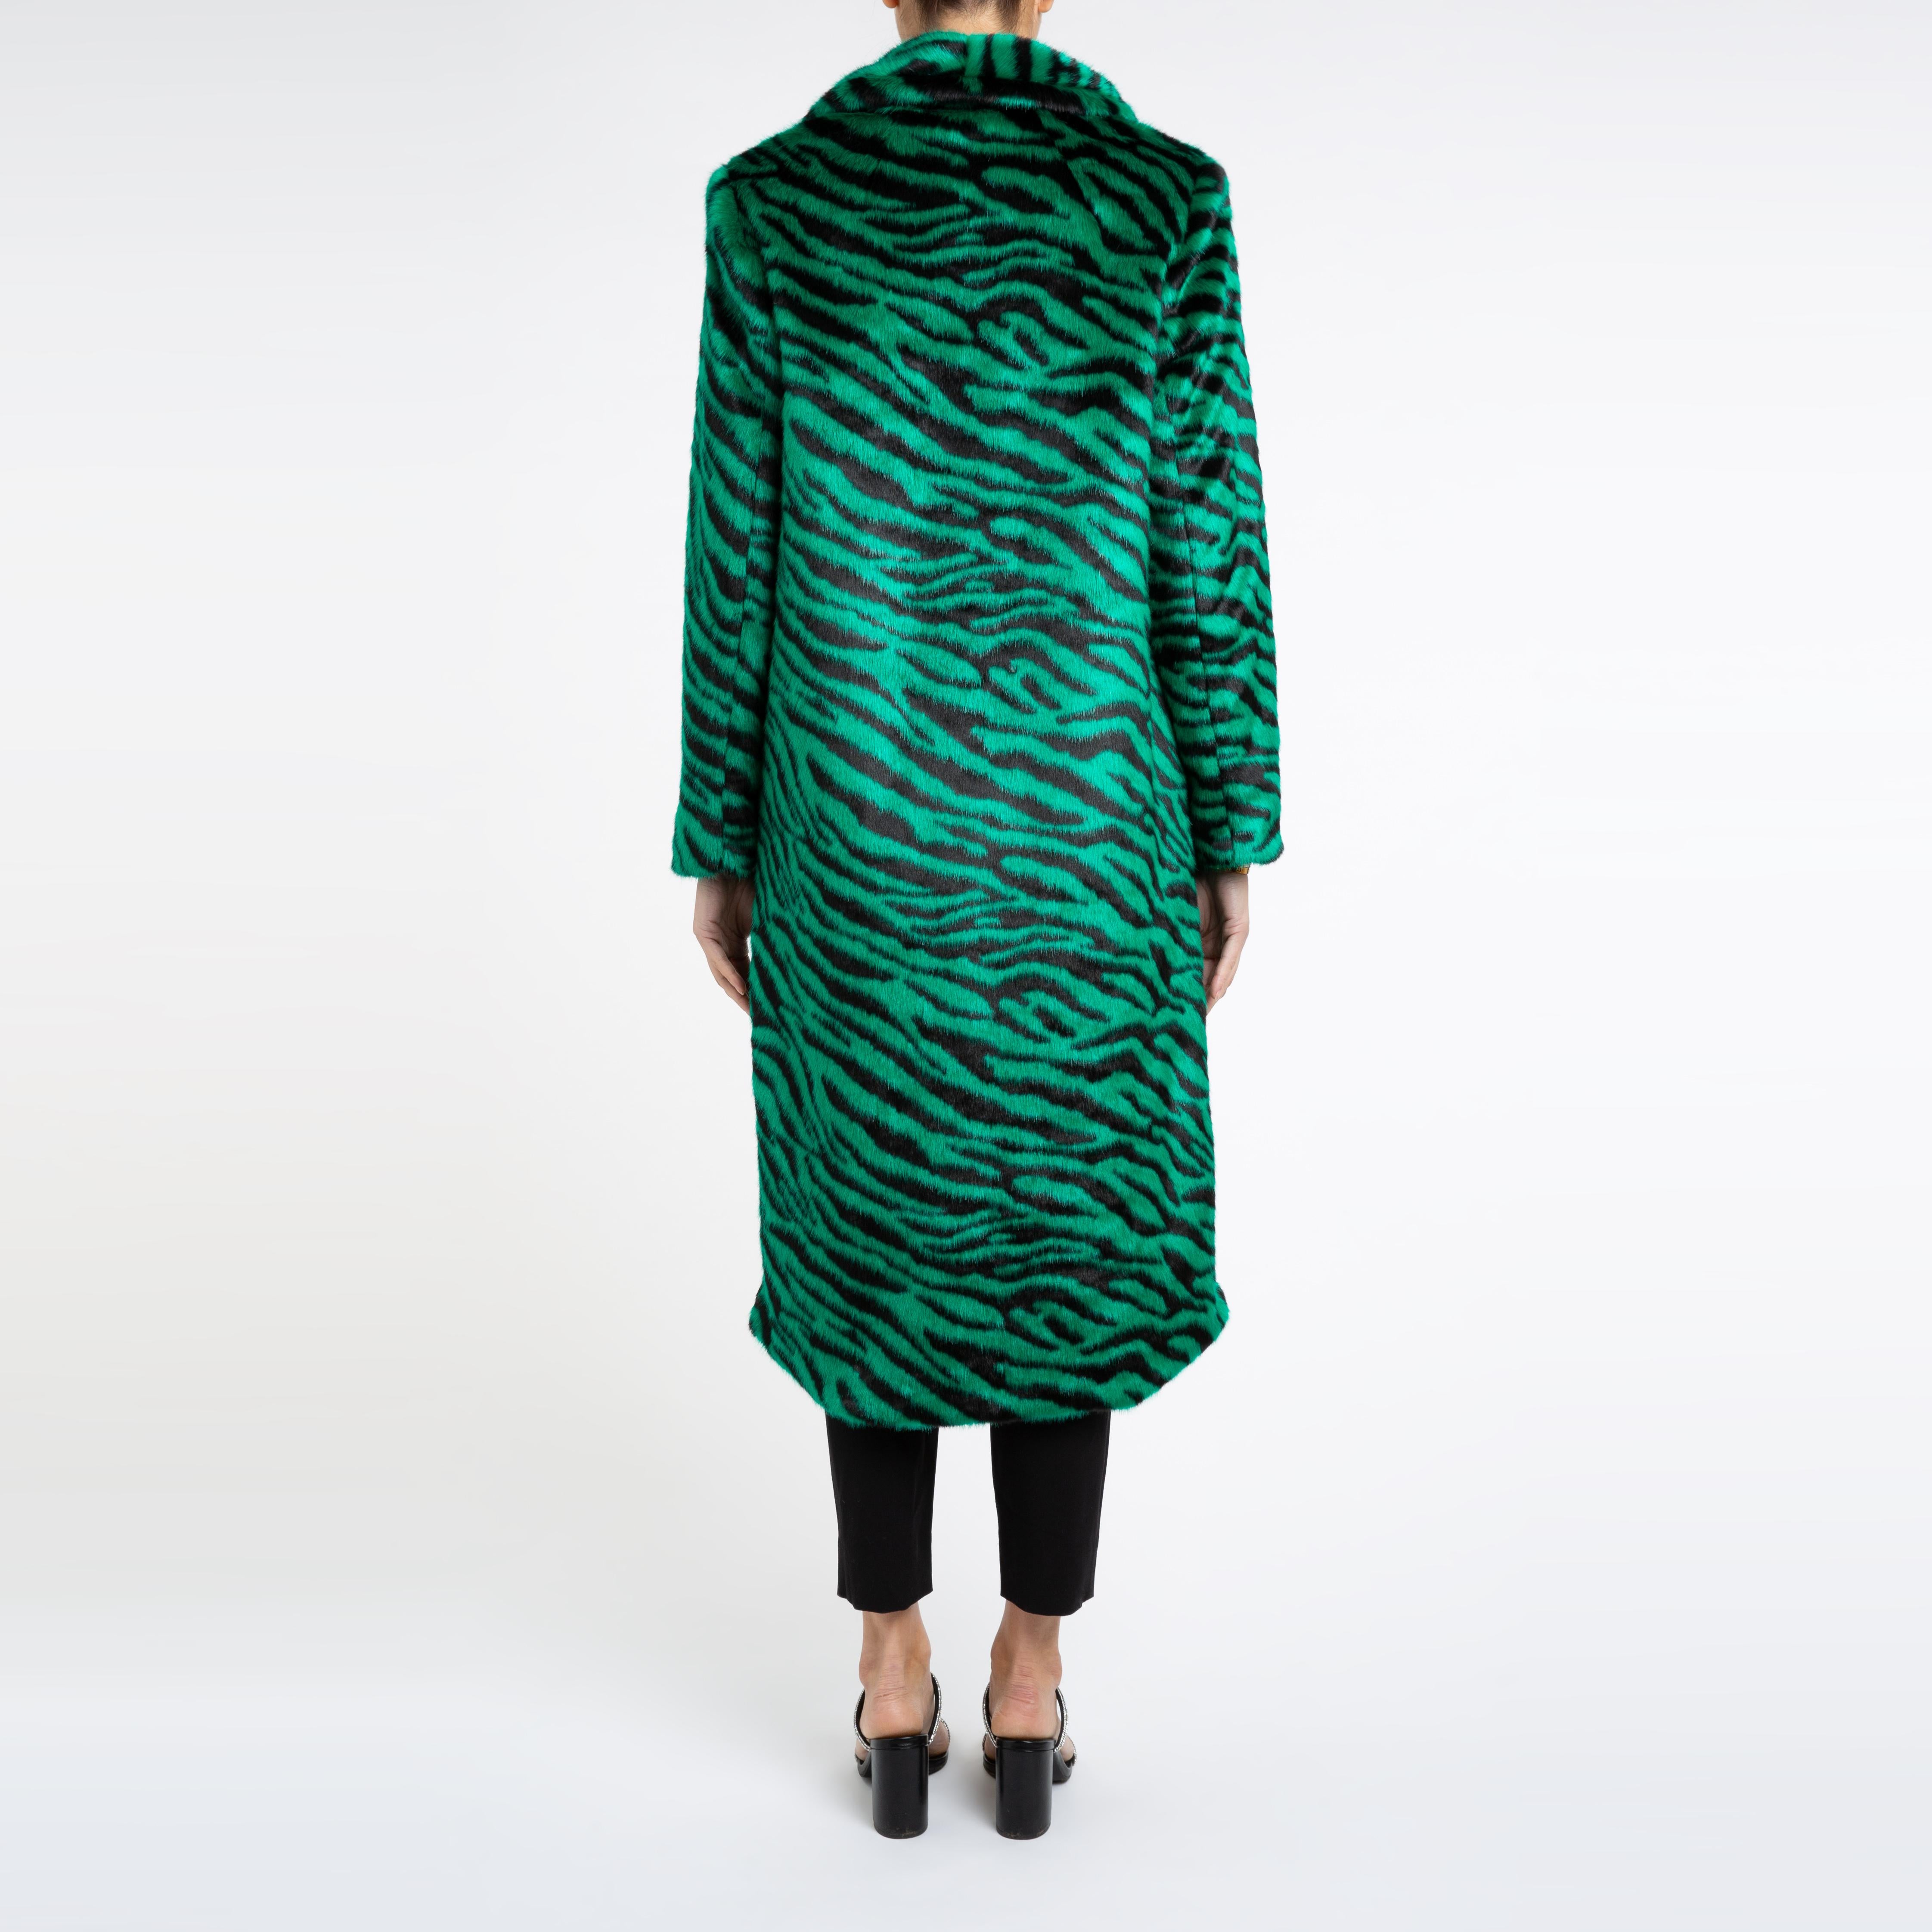 Women's Verheyen London Esmeralda Faux Fur Coat in Emerald Green Zebra Print size uk 10 For Sale